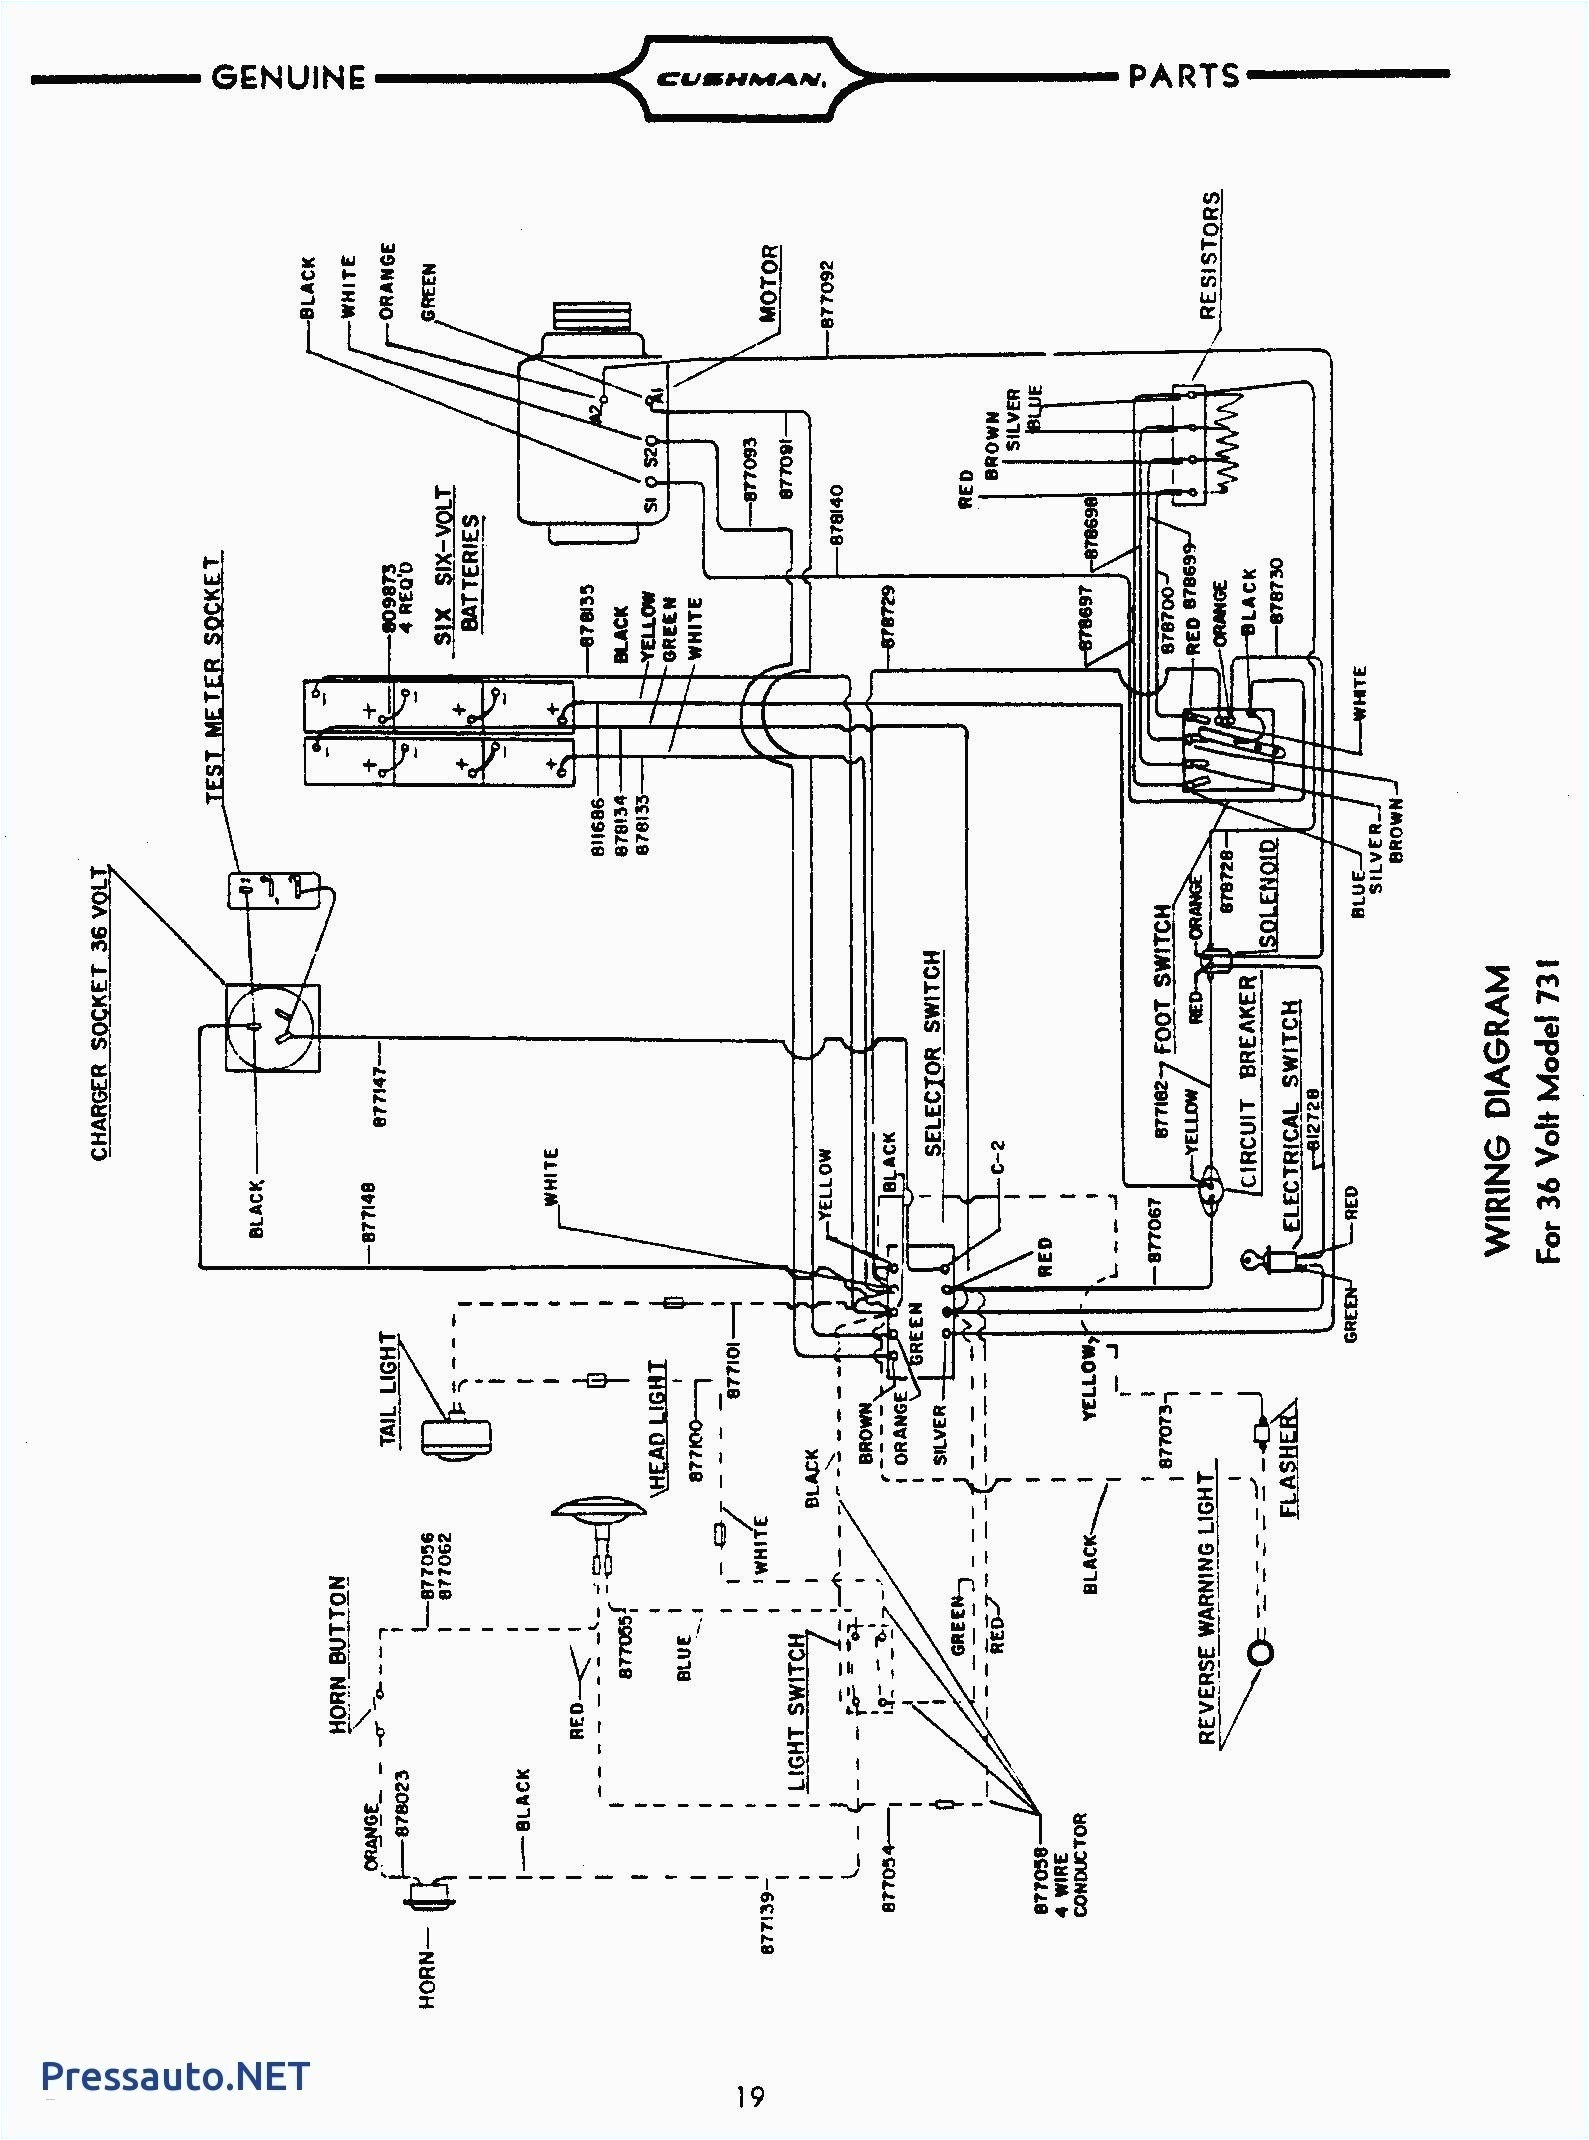 ezgo pds wiring diagram wiring diagram ez go electric golf cart refrence wiring diagram od rv park jmcdonaldfo 2n jpg